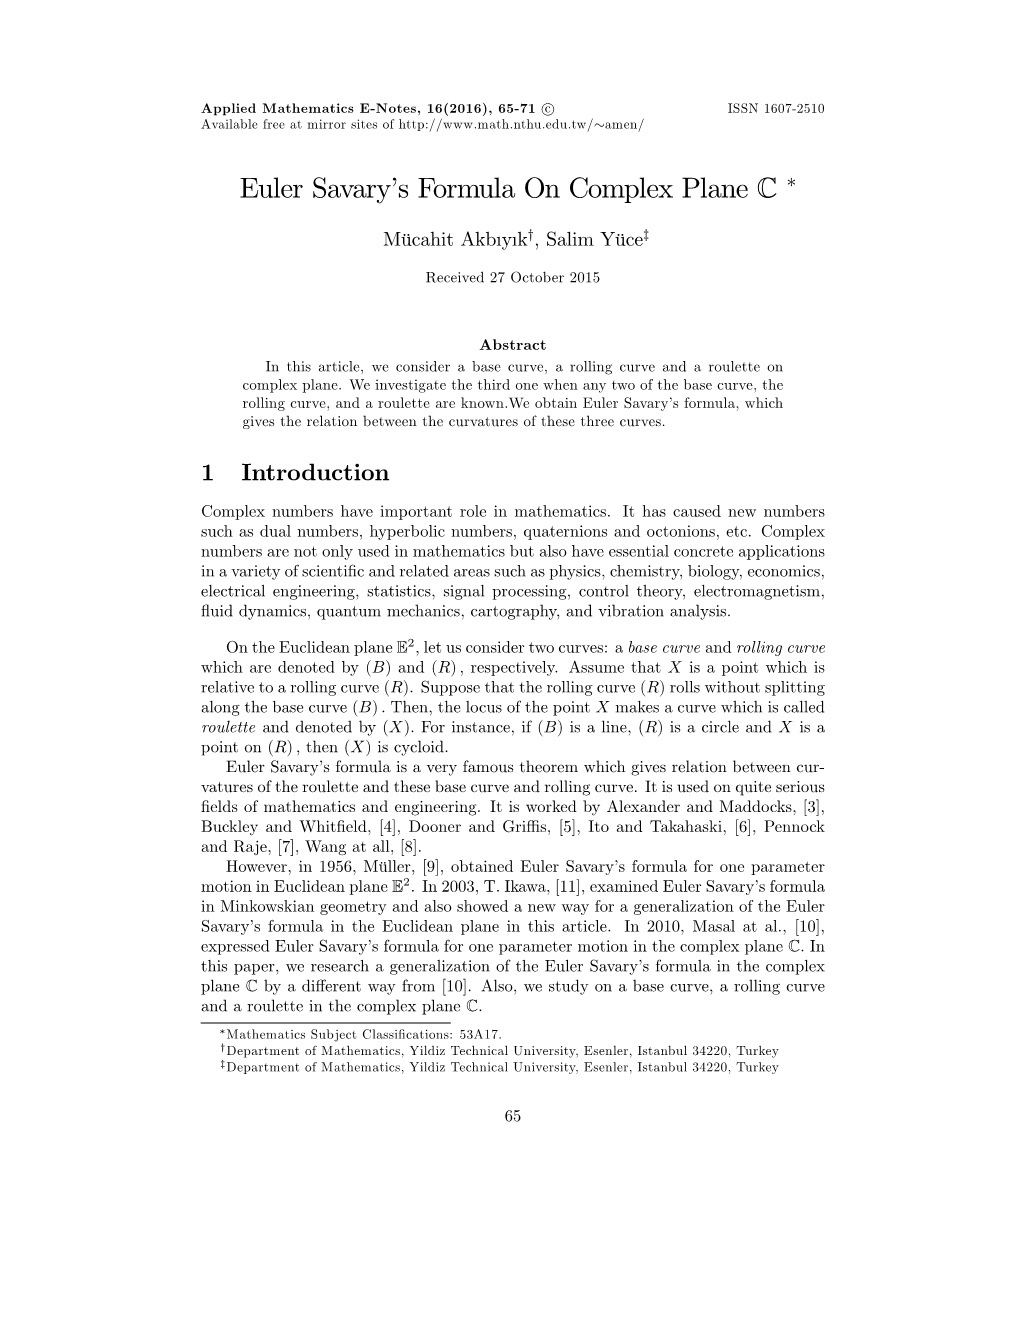 Euler Savary's Formula on Complex Plane